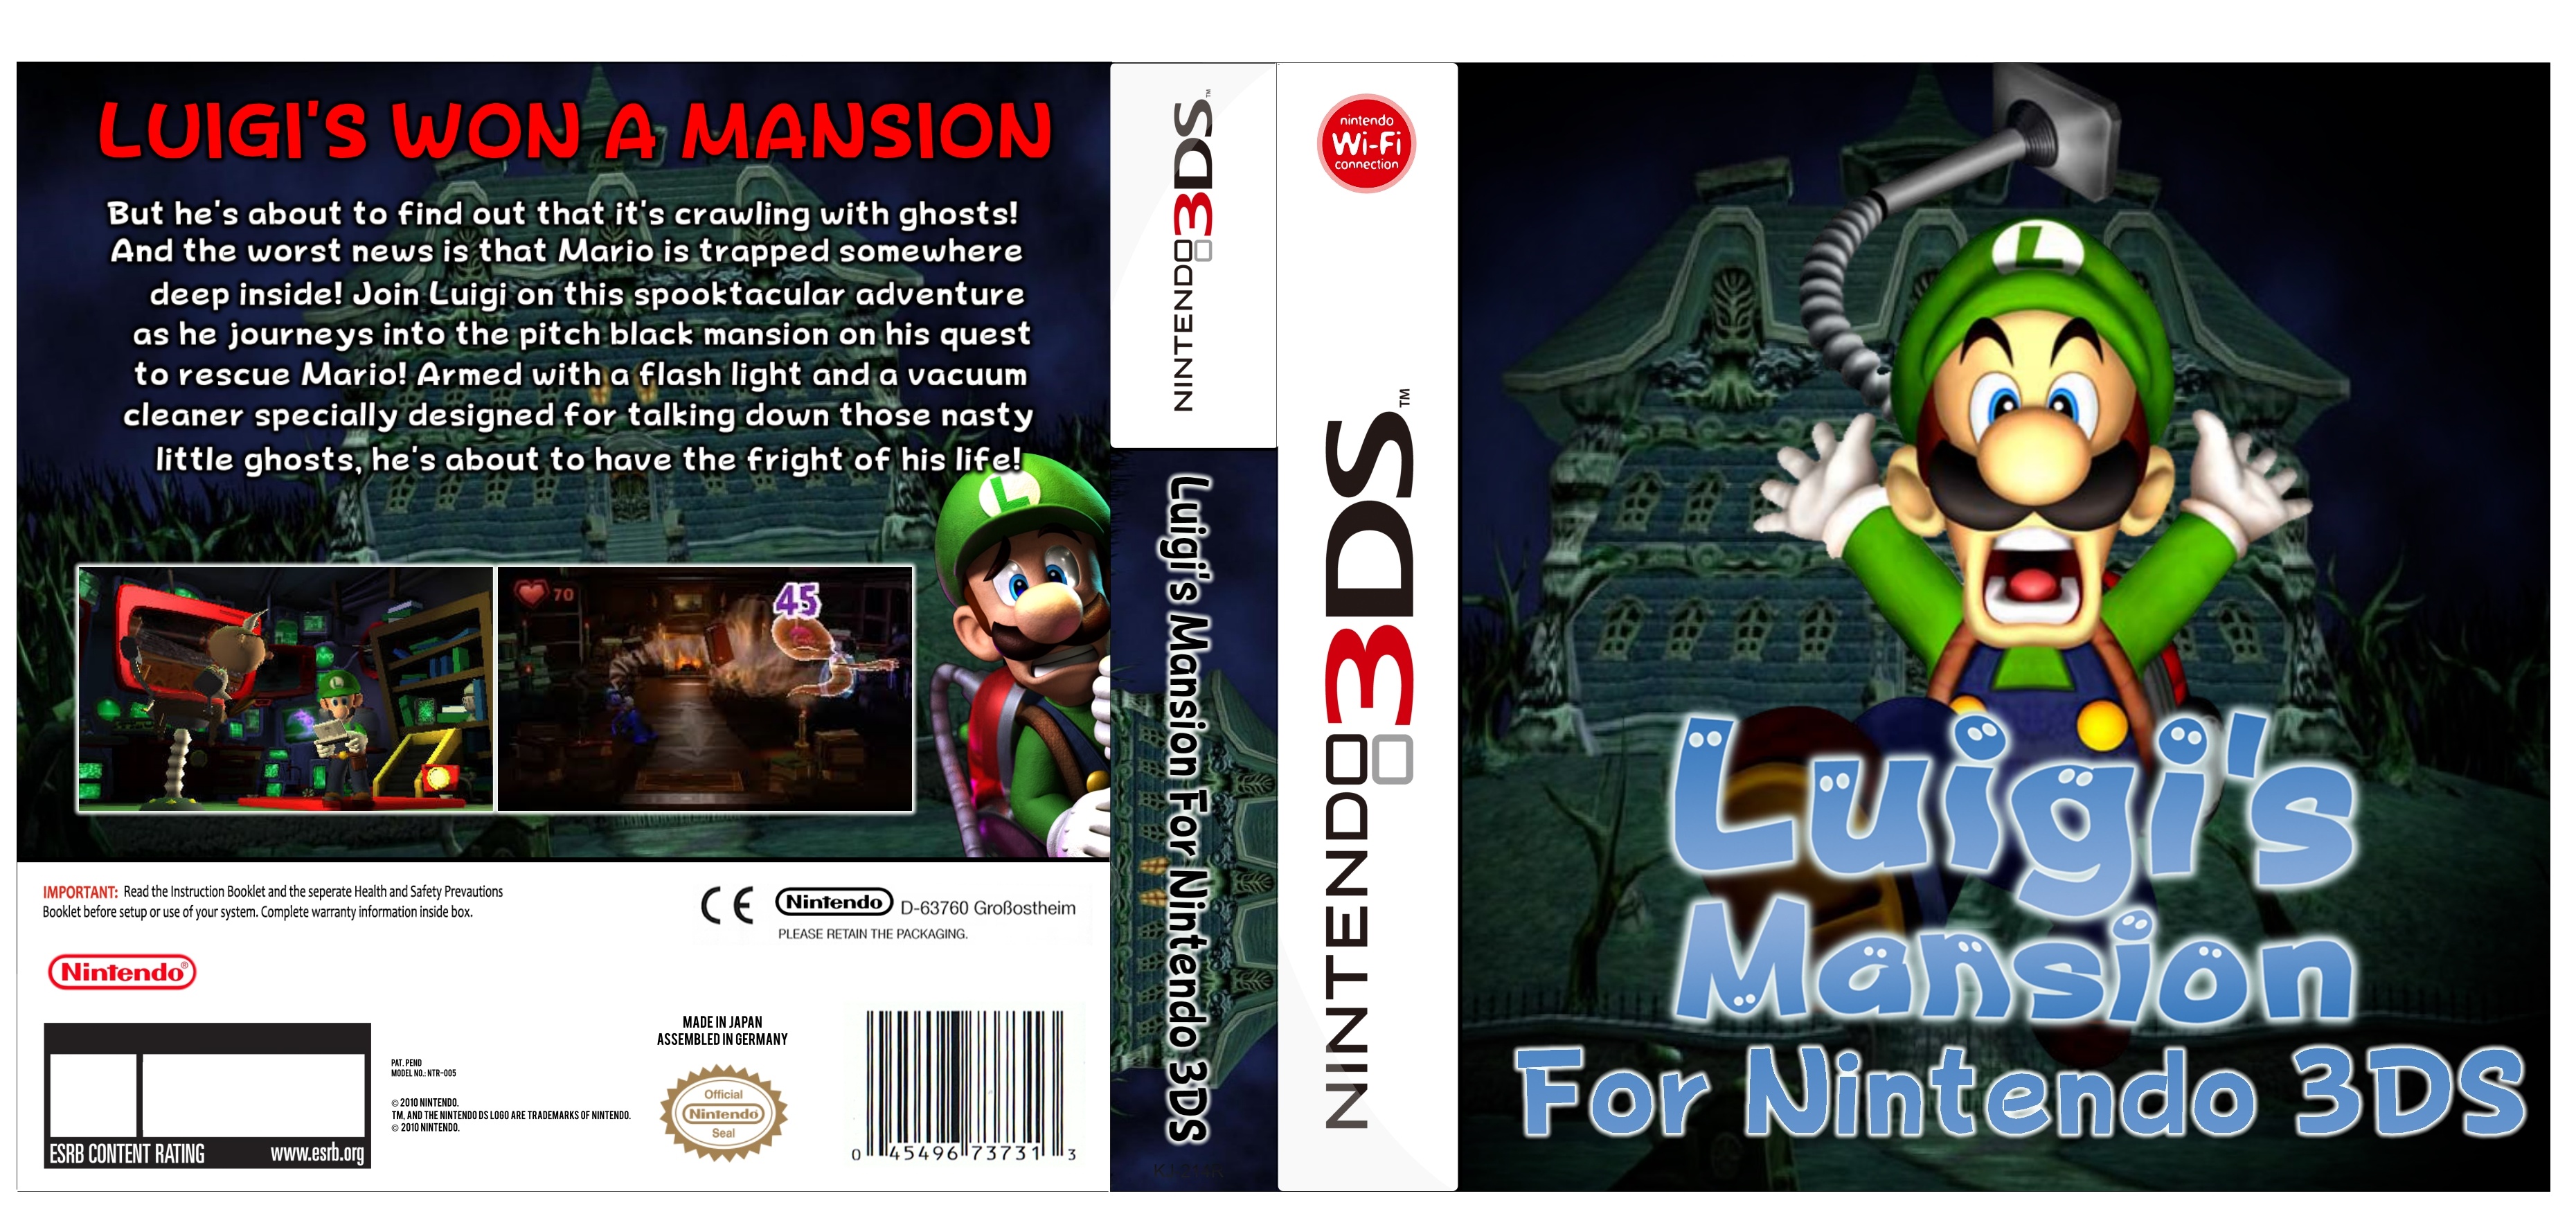 Luigi's Mansion for Nintendo 3DS box cover